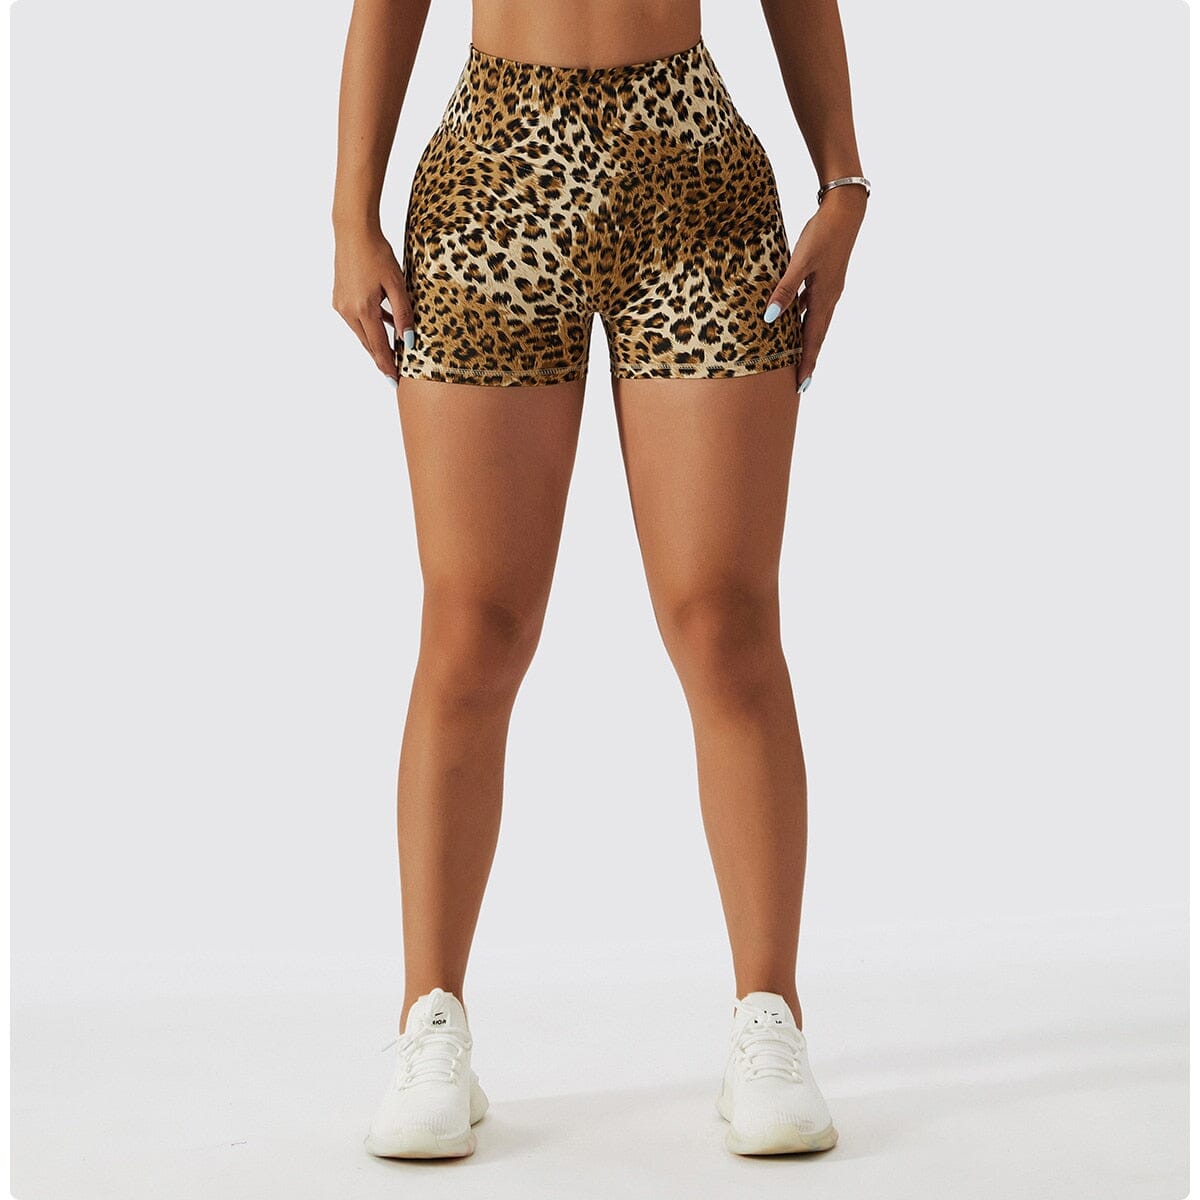 Chic Leopard Shorts Activewear Truetights 